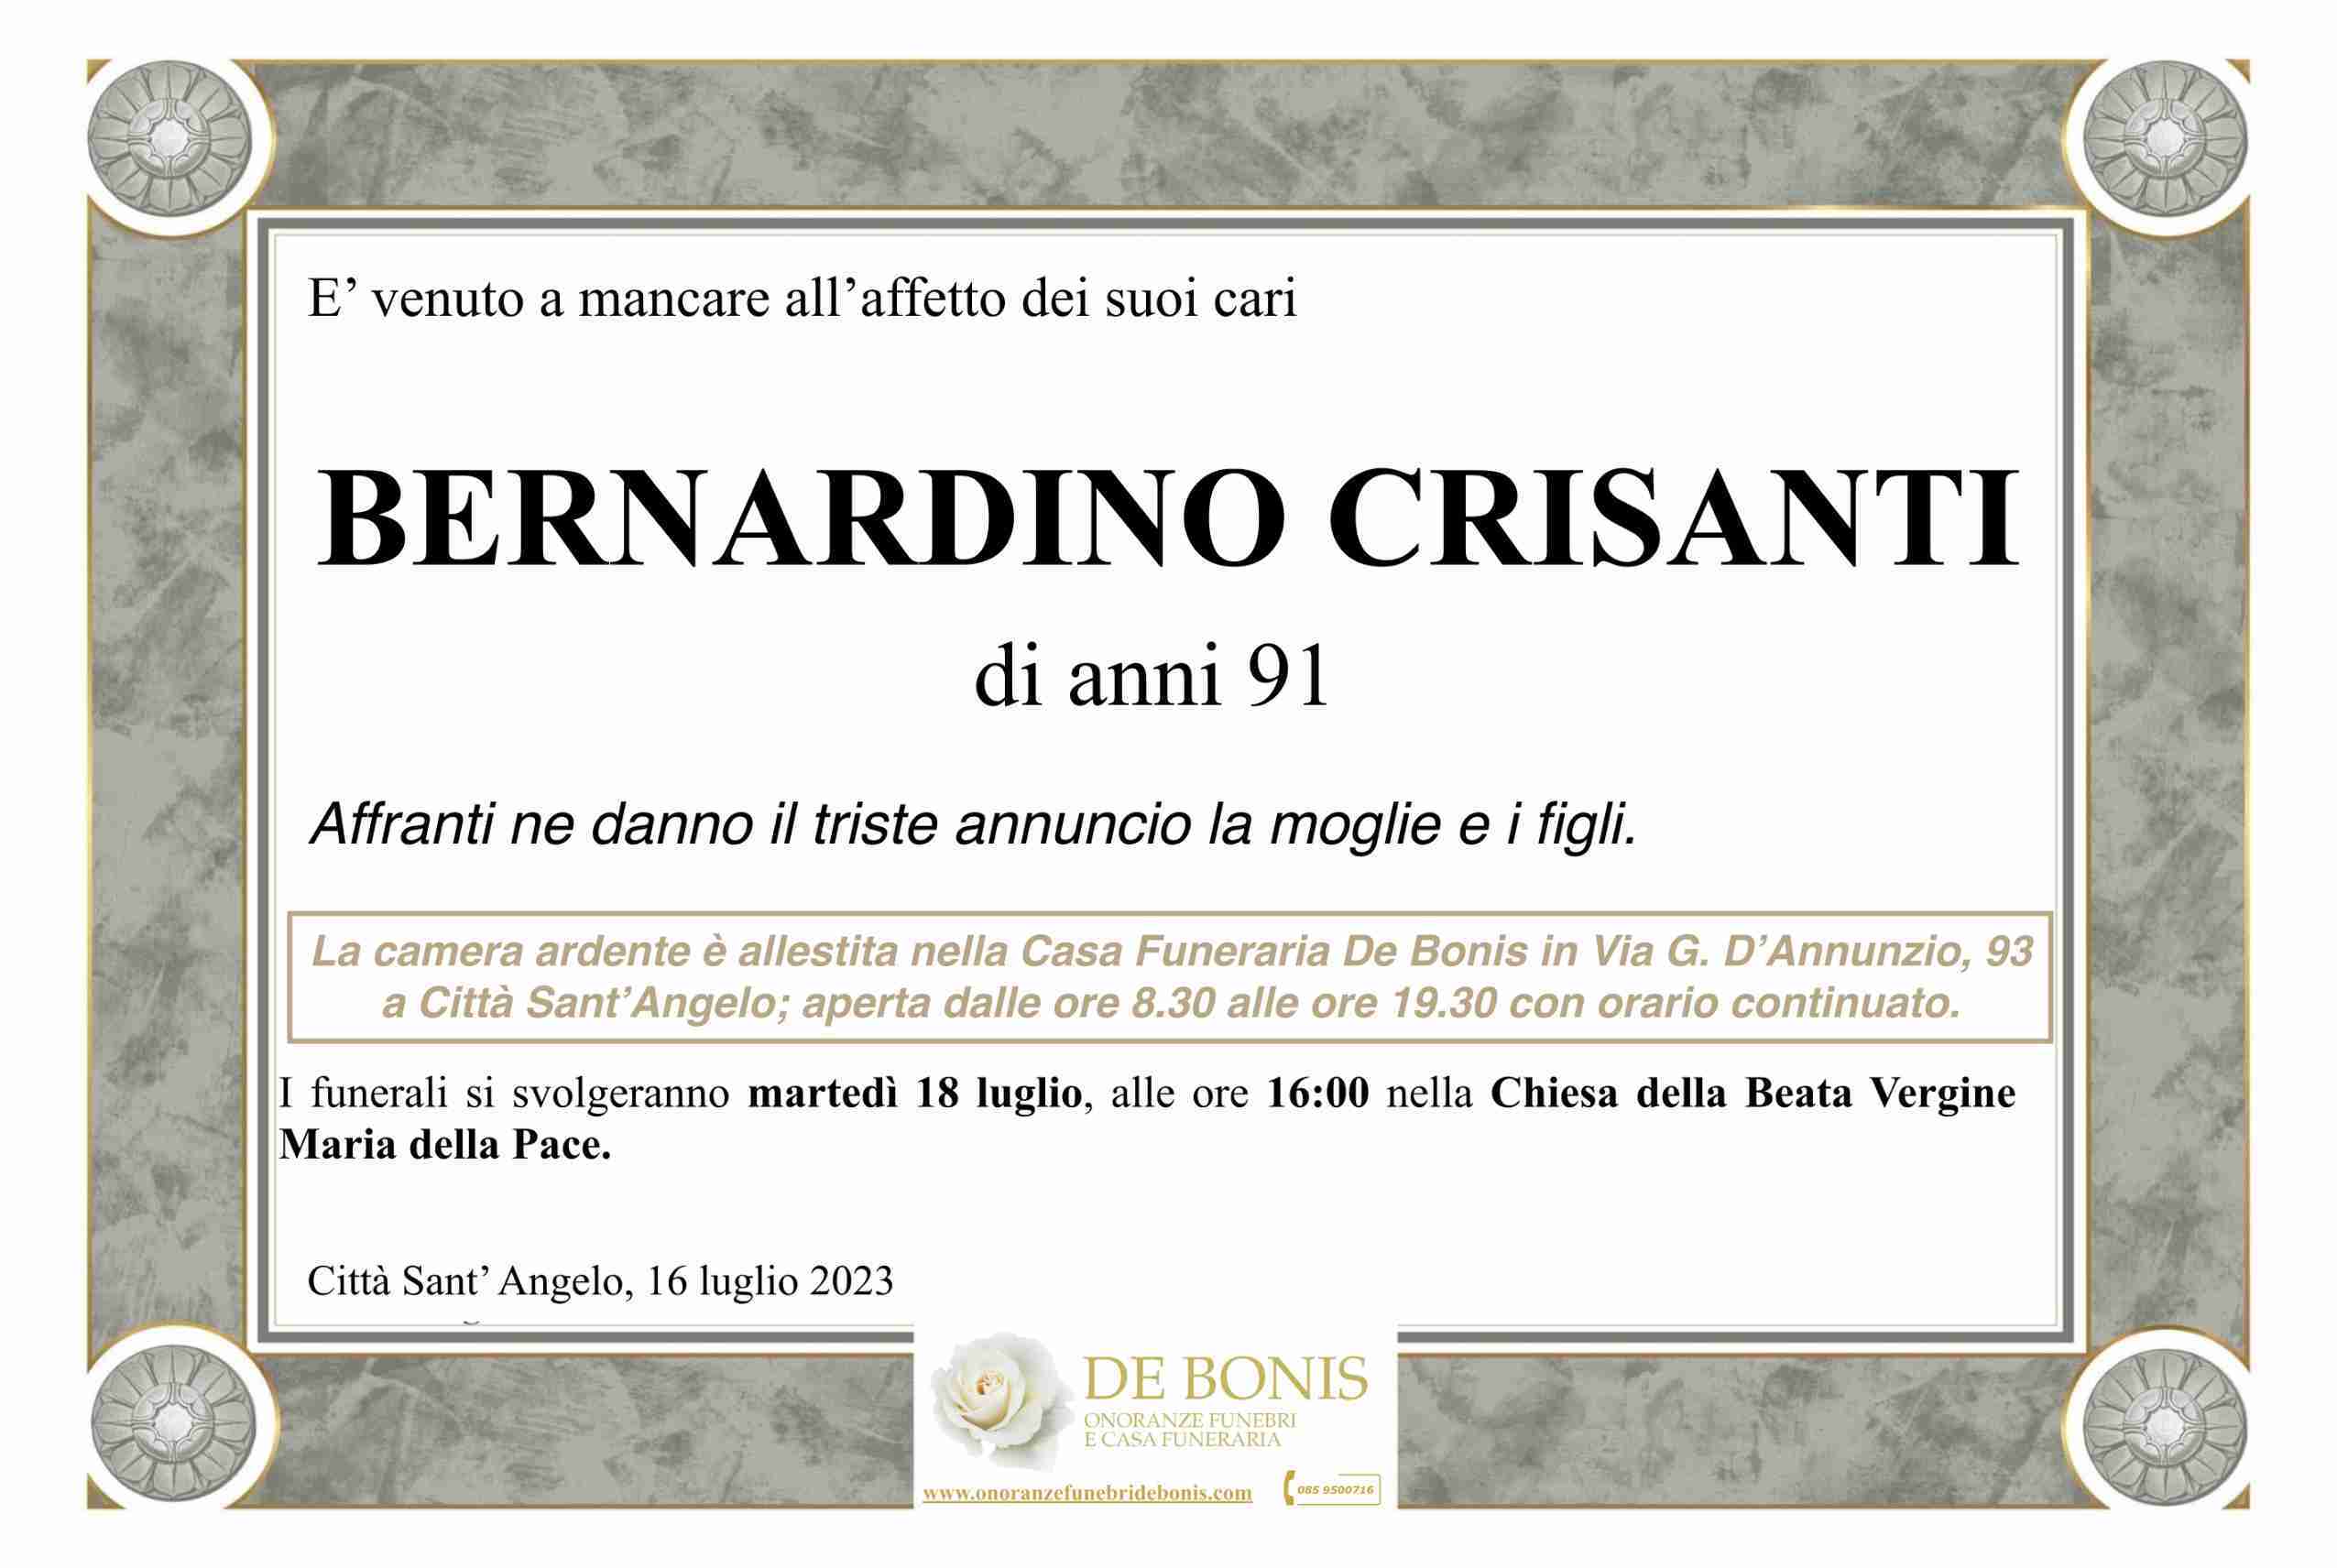 Bernardino Crisanti